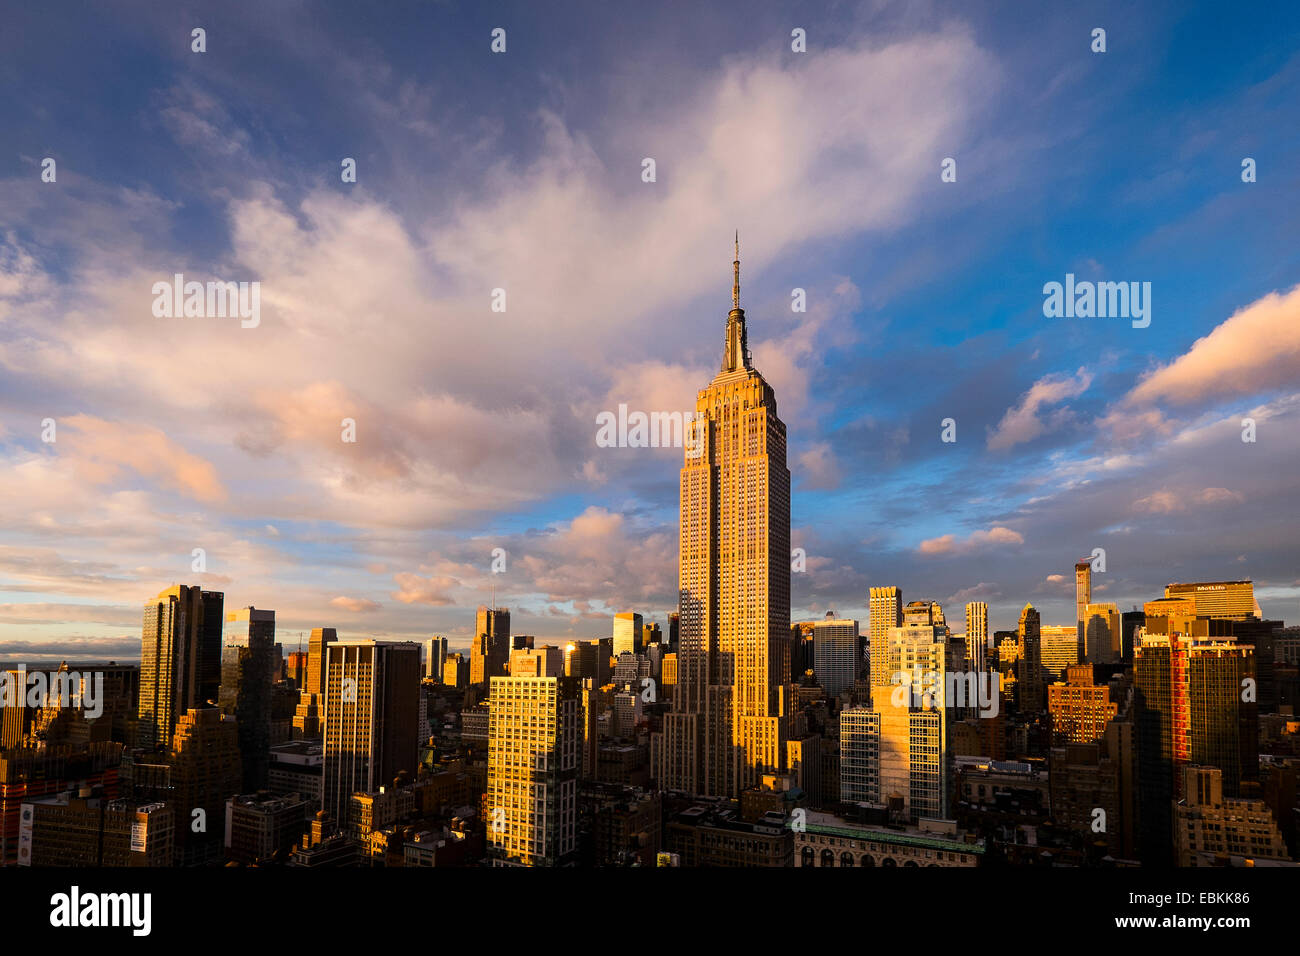 USA, New York State, New York, paysage urbain avec l'Empire State Building au coucher du soleil Banque D'Images